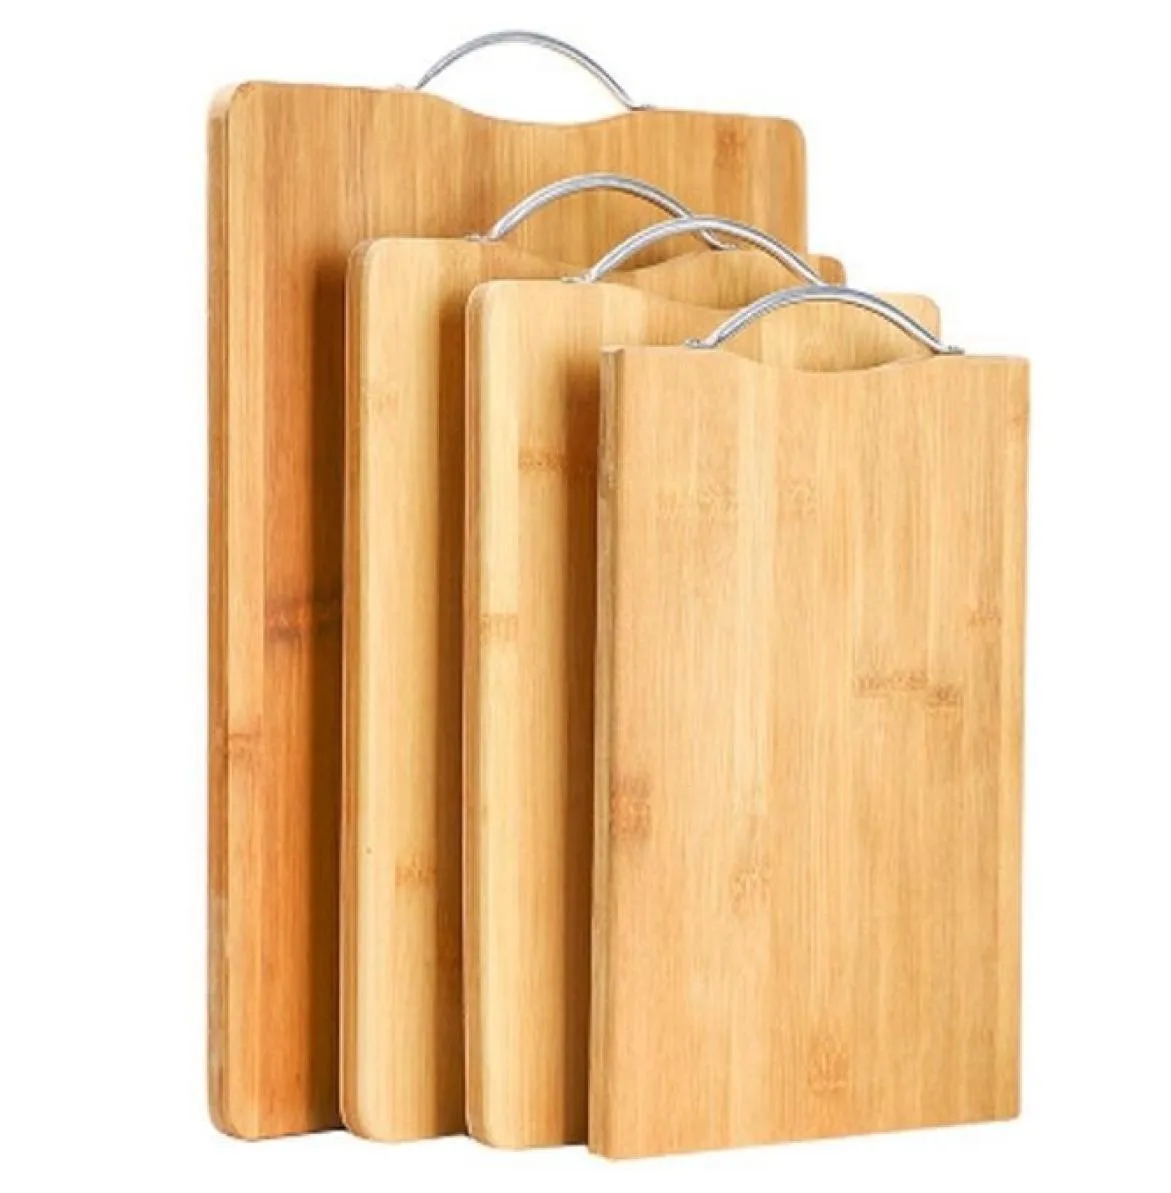 Karbonisierte Bambus-Schneideblöcke, Küchen-Obstbrett, große, verdickte Haushalts-Schneidebretter, C05119018045